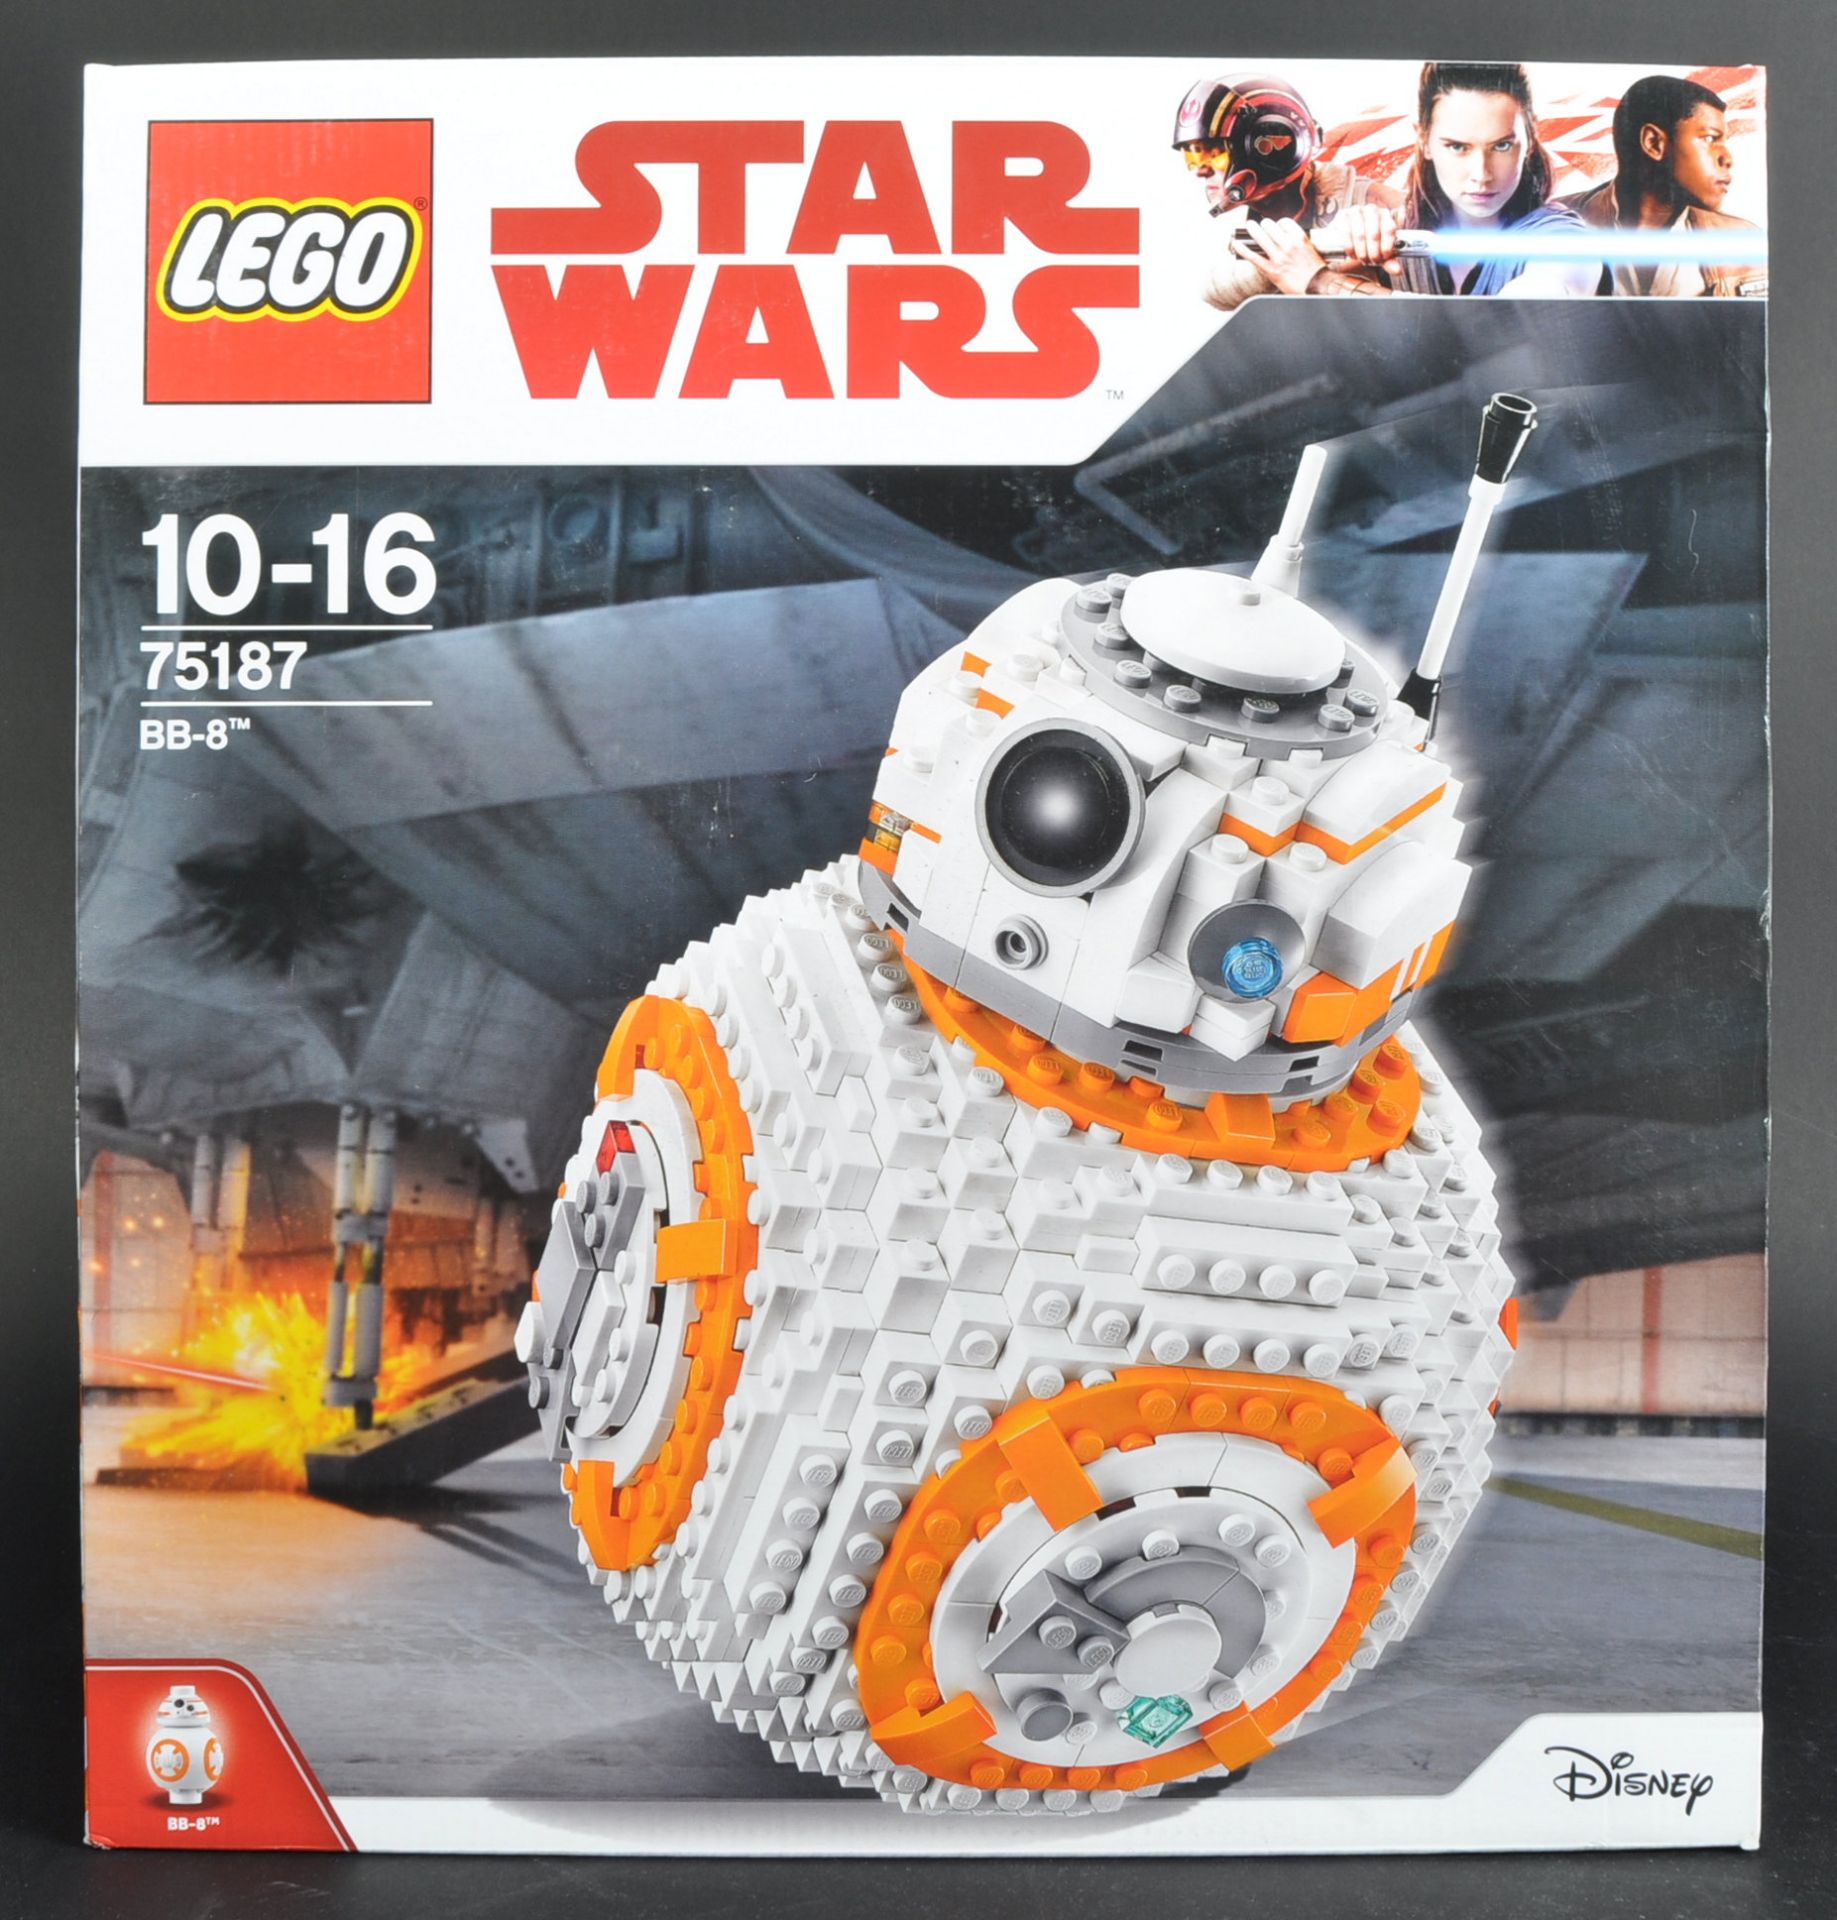 LEGO SET - STAR WARS - 75187 - BB-8 - Image 2 of 2